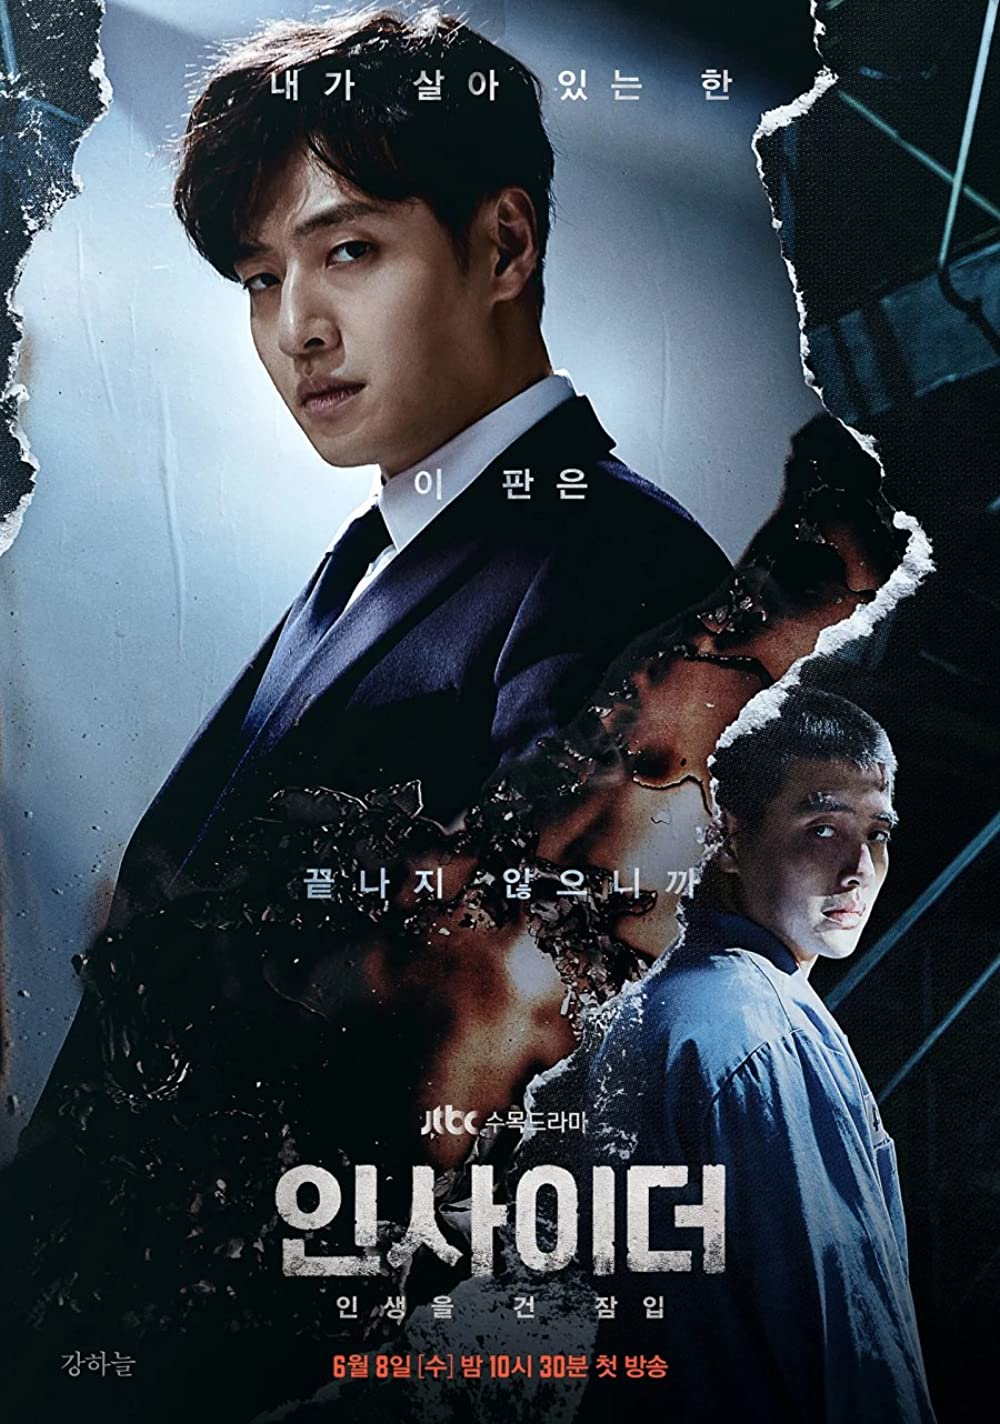 9 Rekomendasi drama Korea tema kehidupan penjara, kadang mencekam